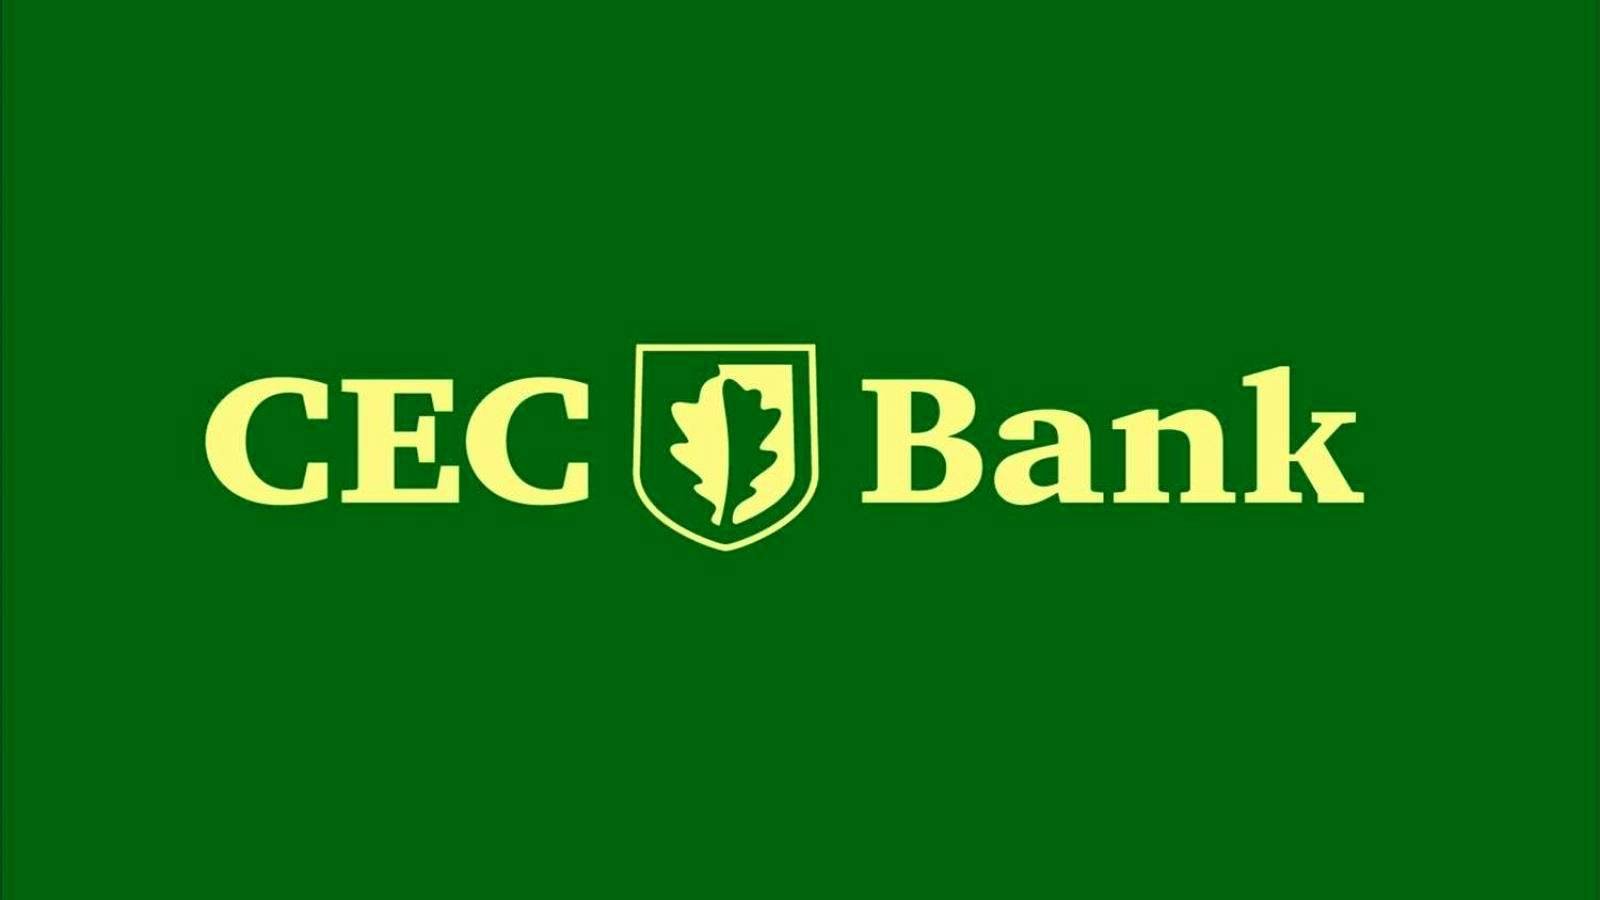 CEC Bank Transmite Instiintare ULTIMA ORA Vizeaza Clientii Romania